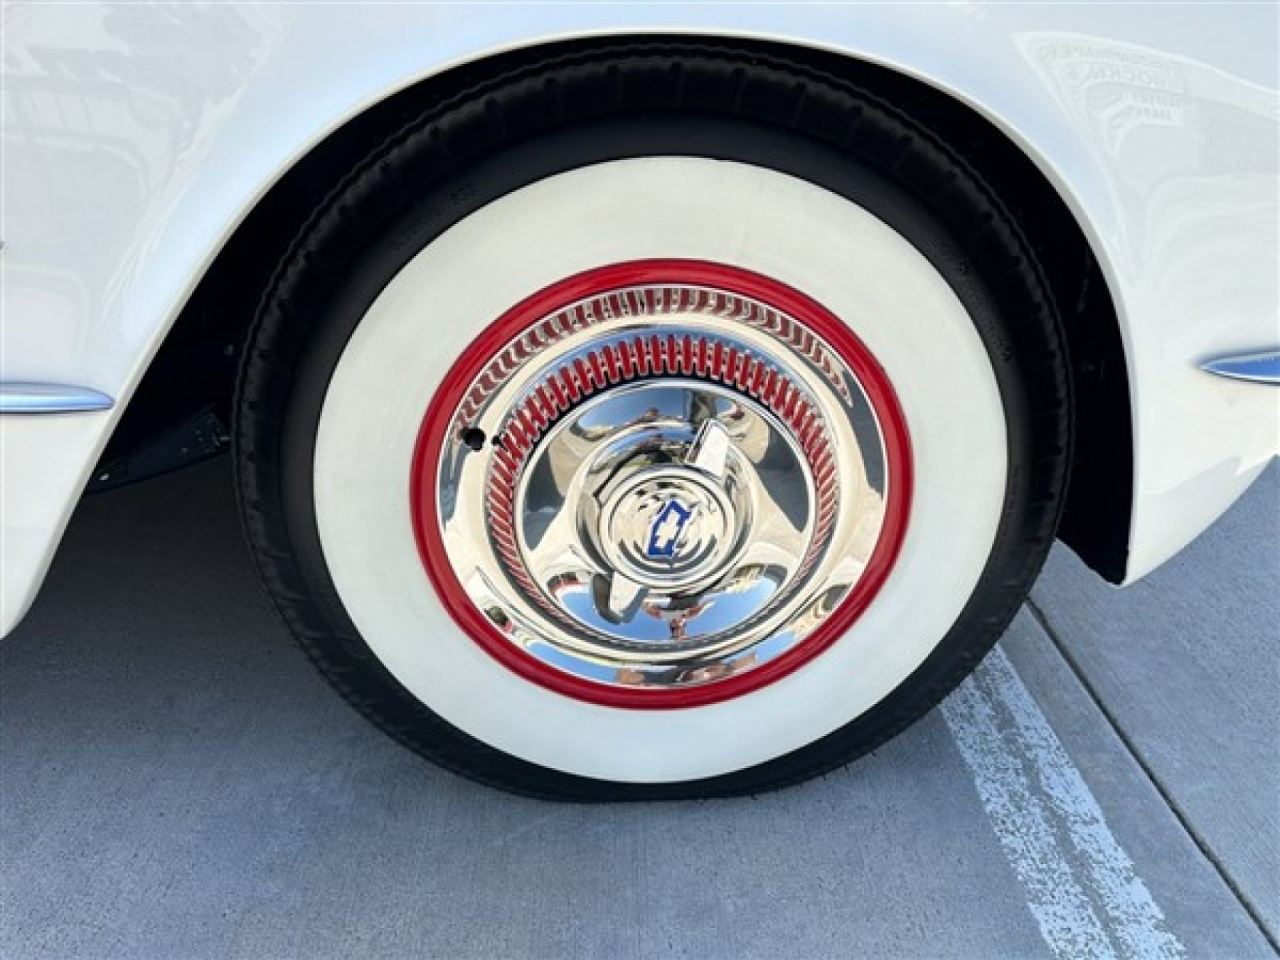 1954 Chevrolet Corvette Roadster (Polo White)